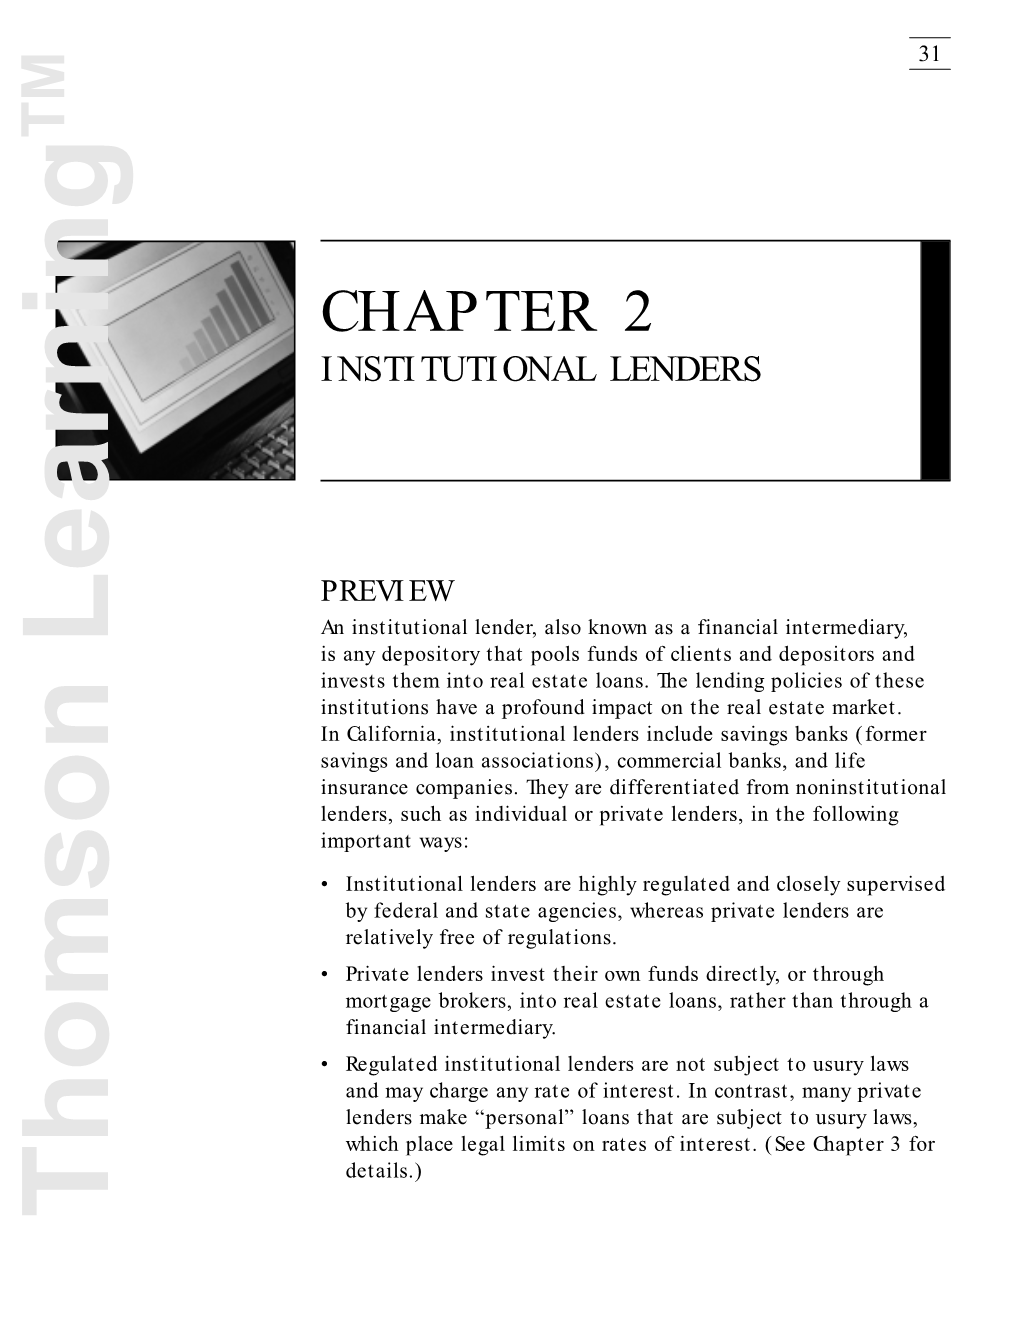 Chapter 2 Institutional Lenders